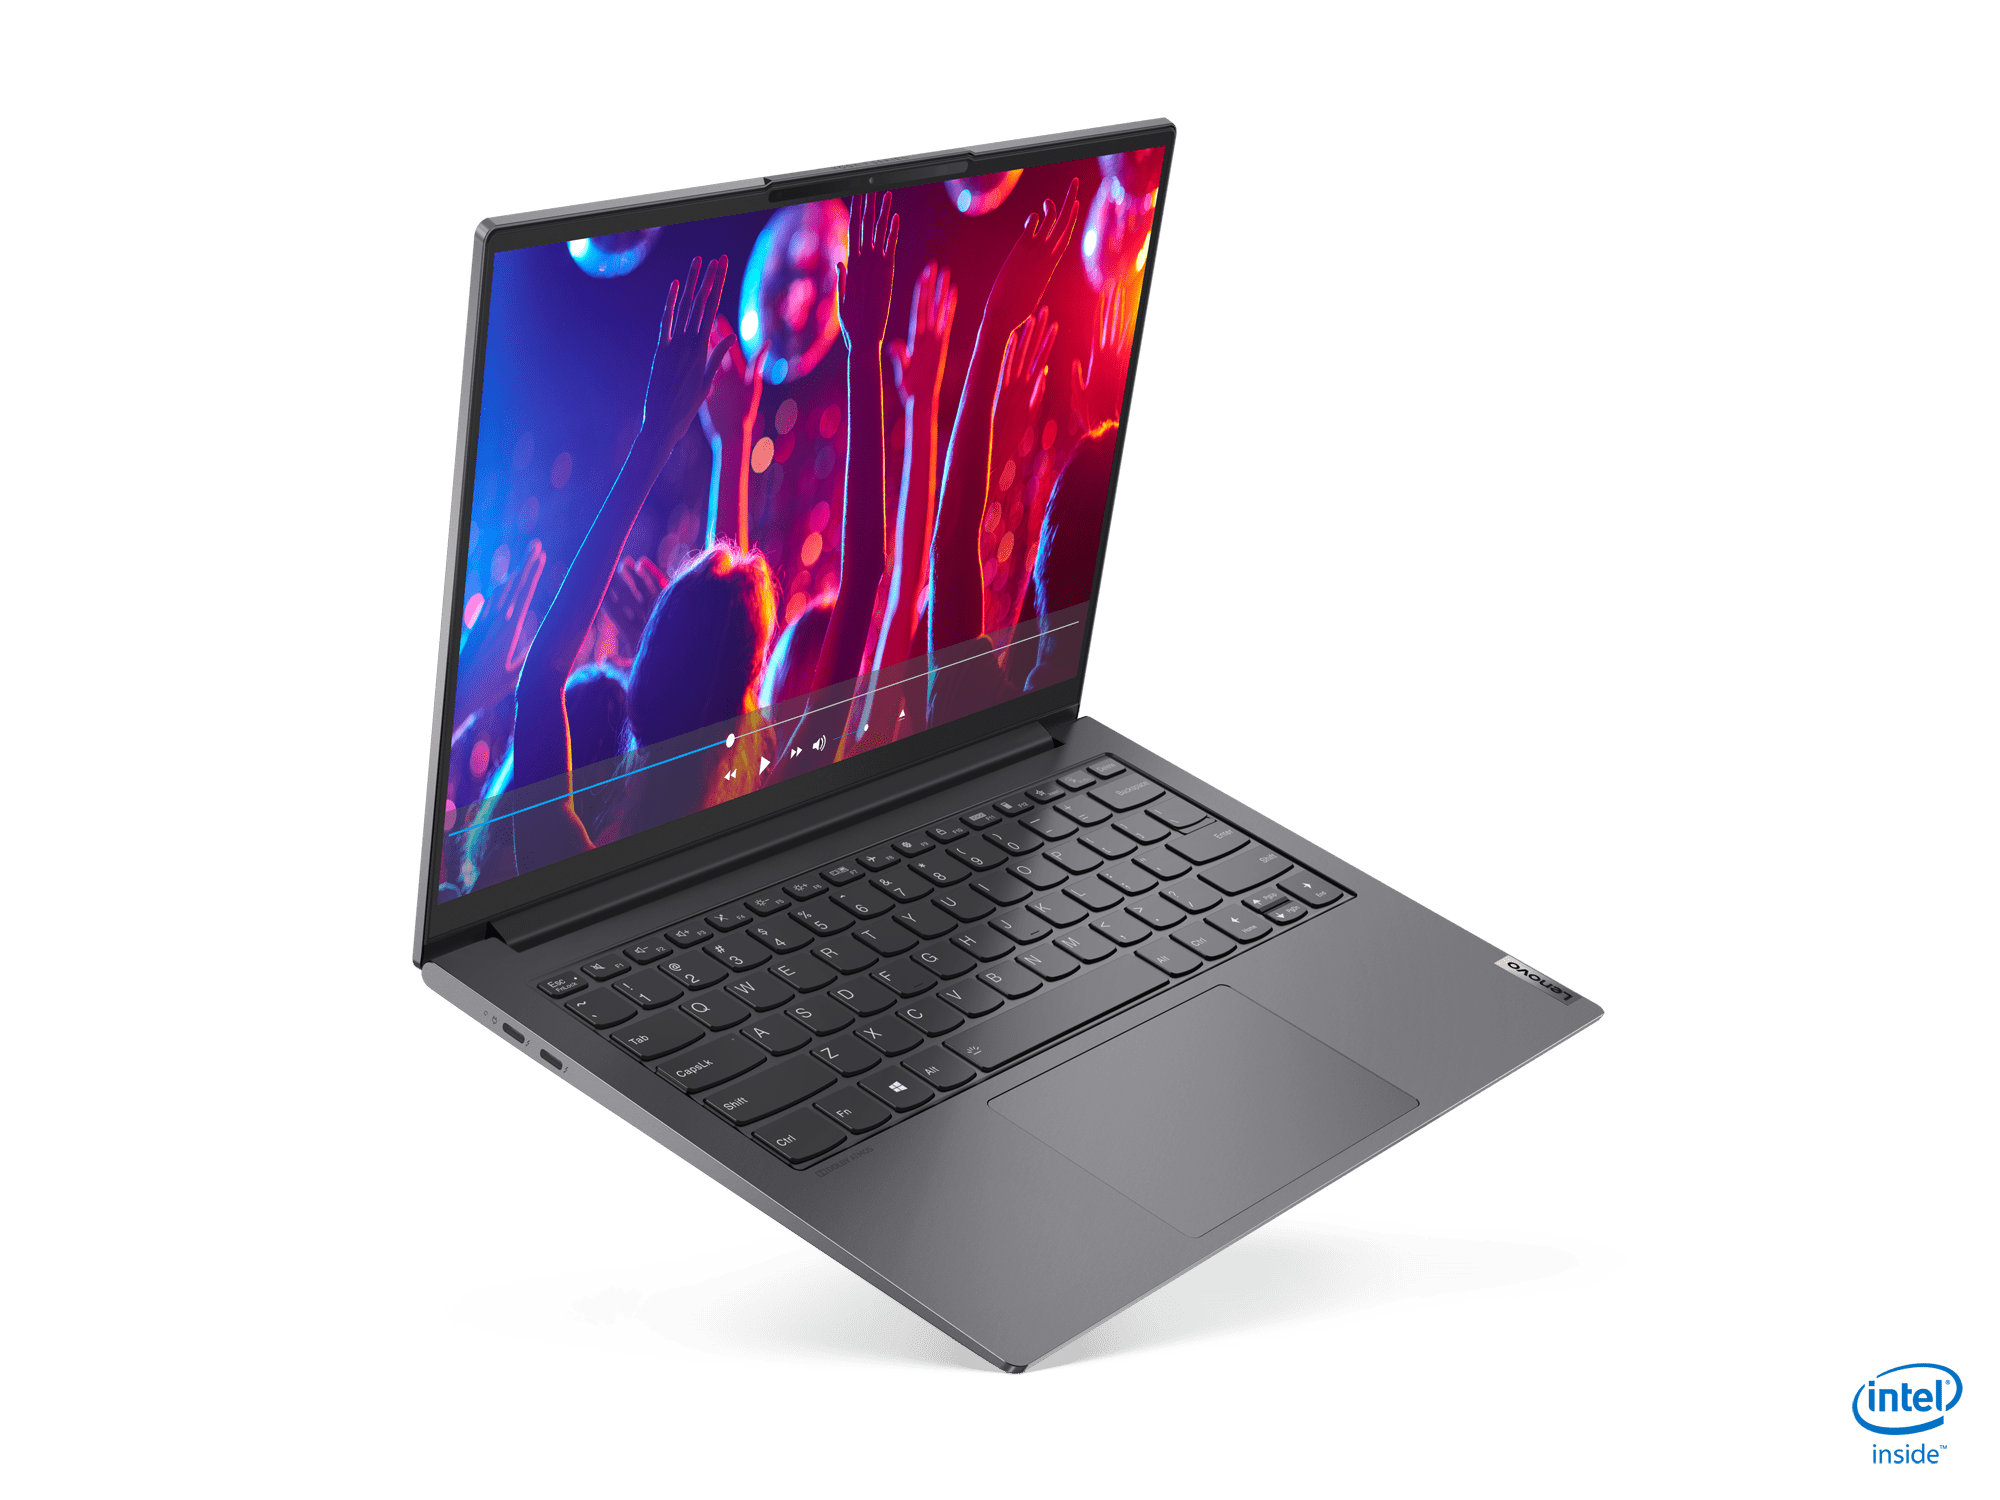 The Latest Lenovo Yoga Laptops Feature New Intel 11th Gen Core Mobile Processors with Intel Iris Xe graphics - Lenovo StoryHub